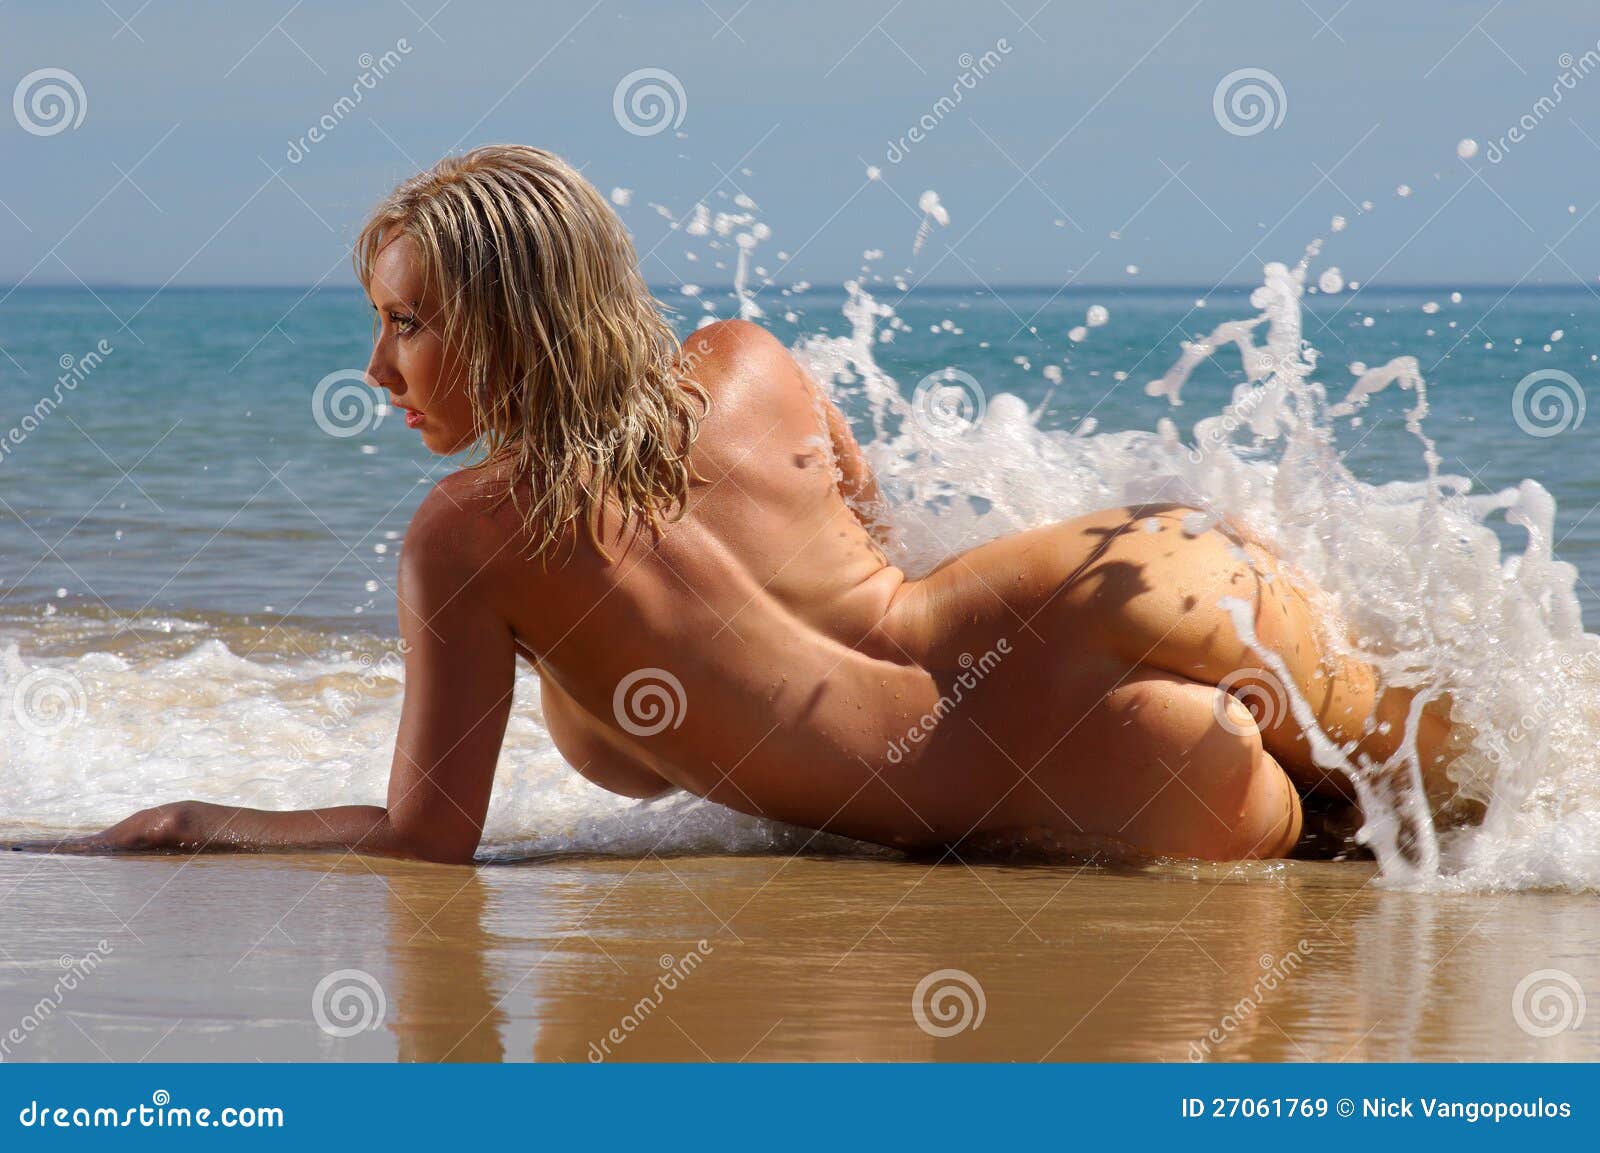 High res nude beach girls